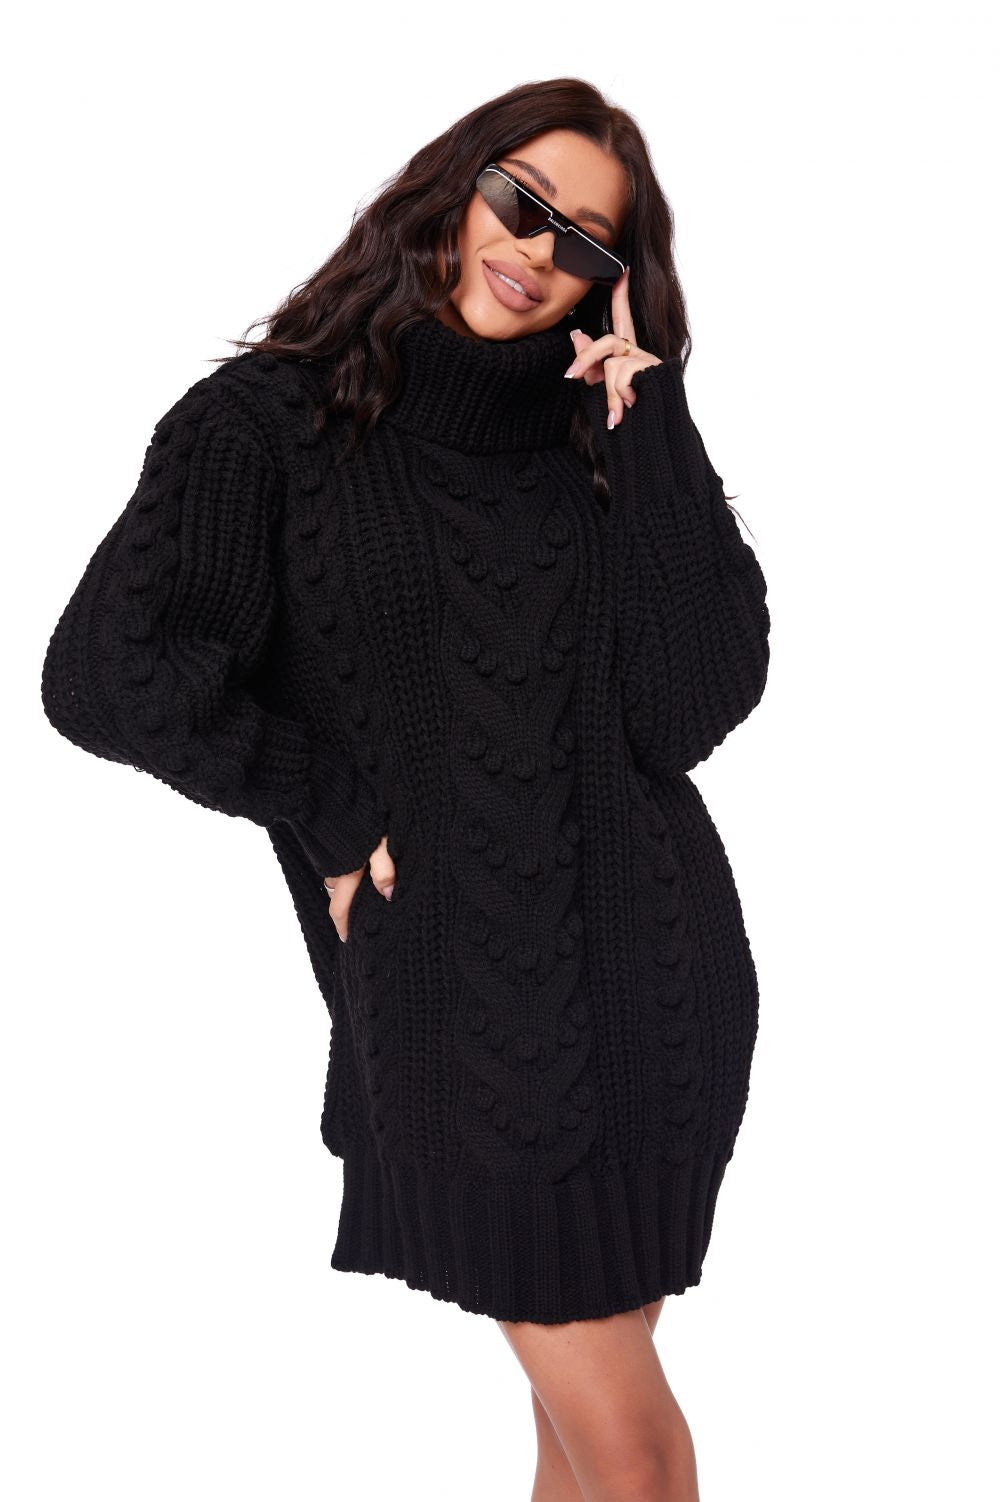 Black casual knit women's dress Ceccarelli Bogas